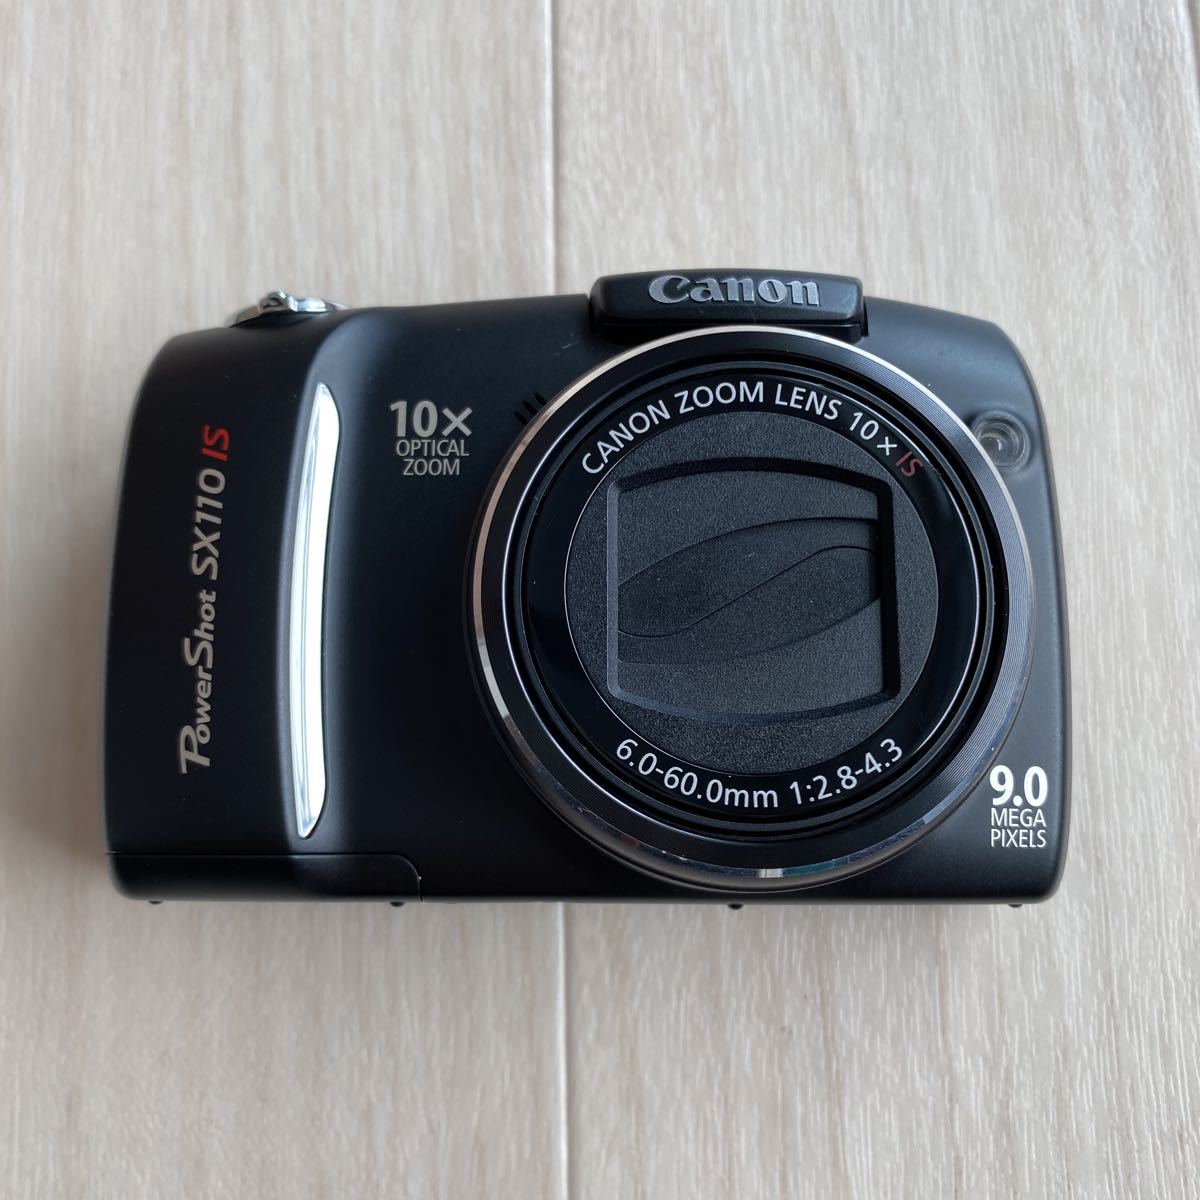 Canon PowerShot SX110 IS キャノン パワーショット 単三電池 デジタルカメラ デジカメ 送料無料 D1921